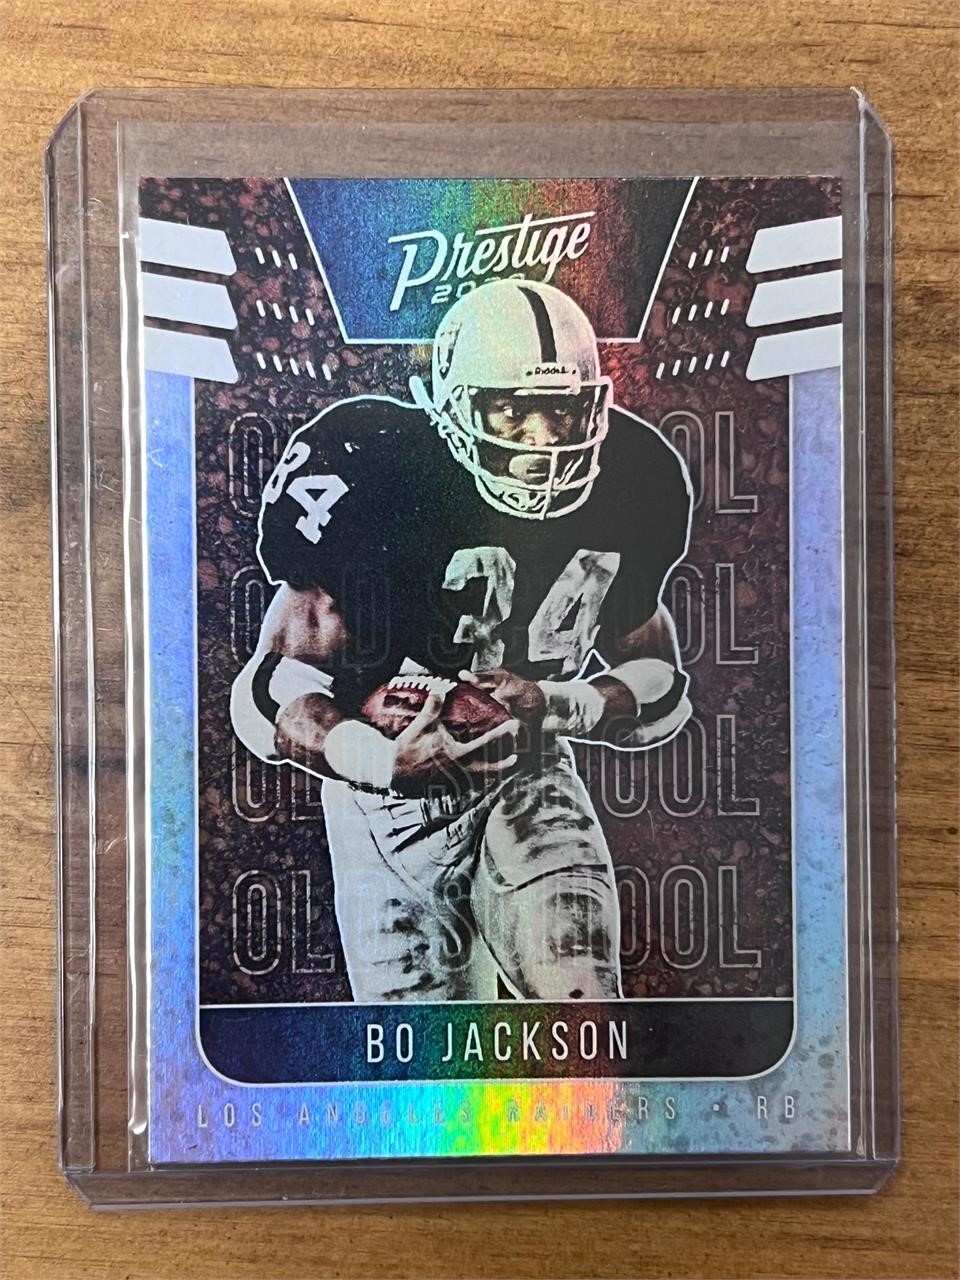 Lot of 9 1990-2022 Bo Jackson NFL cards